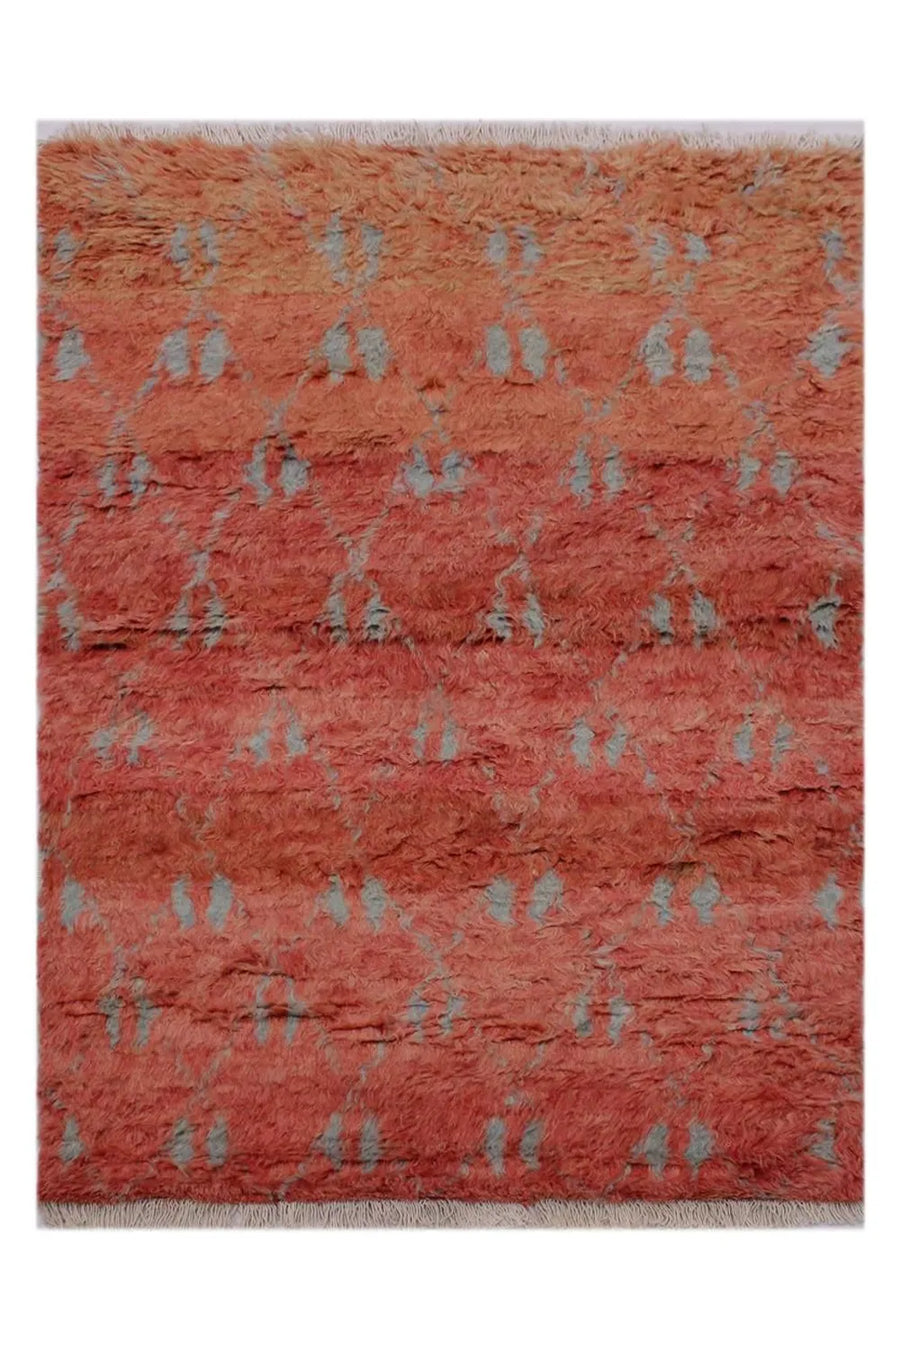 Plush terracotta orange shag rug with a subtle light gray diamond pattern.